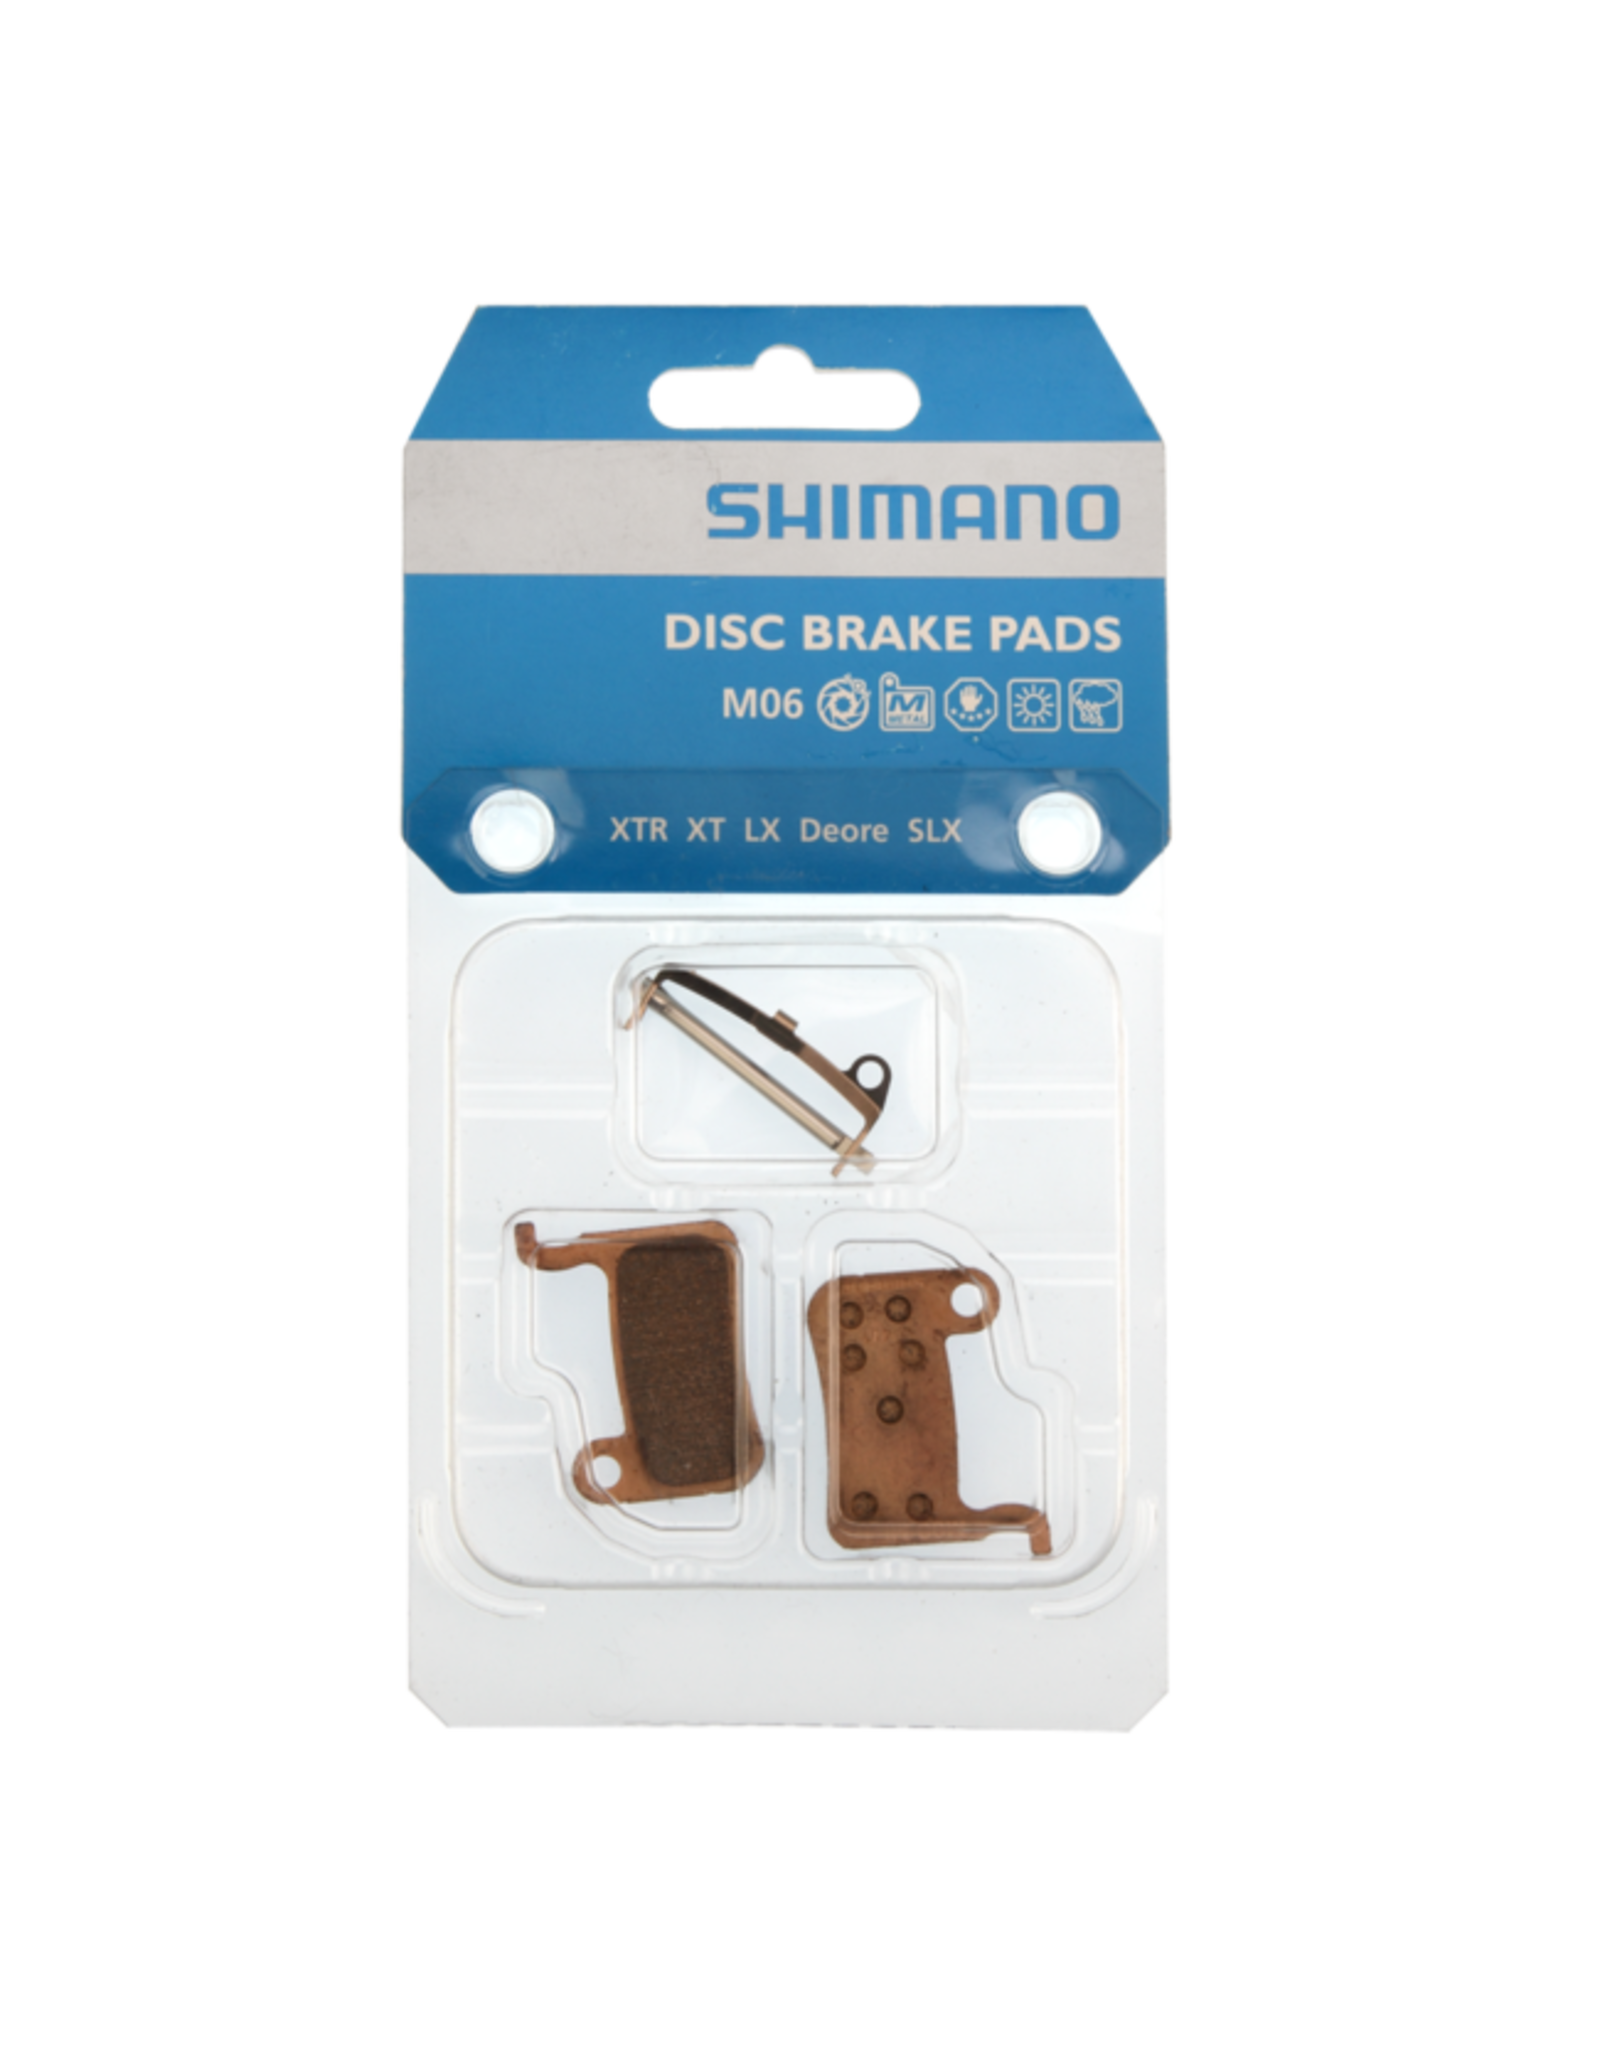 Shimano Plaquettes frein Shim M06 metal (ancien XTR, XT, LX, Deore, SLX)